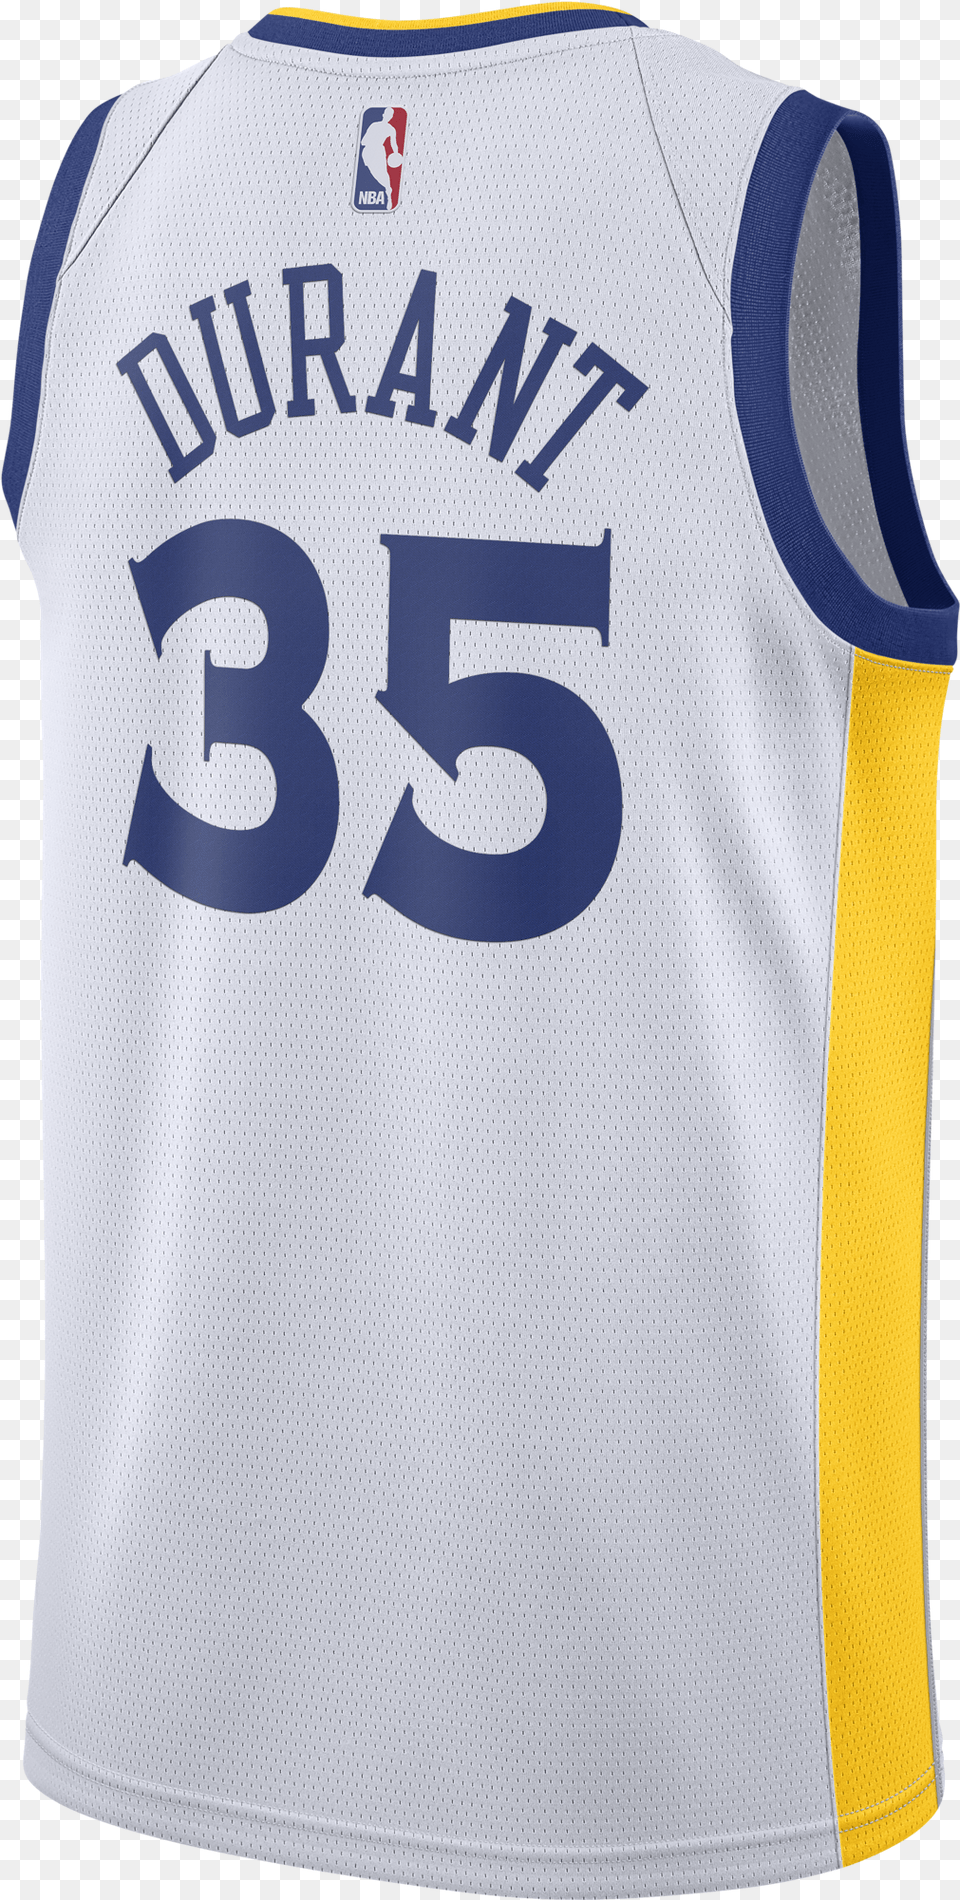 Nike Nba Golden State Warriors Kevin Durant Swingman Sports Jersey, Clothing, Shirt Png Image